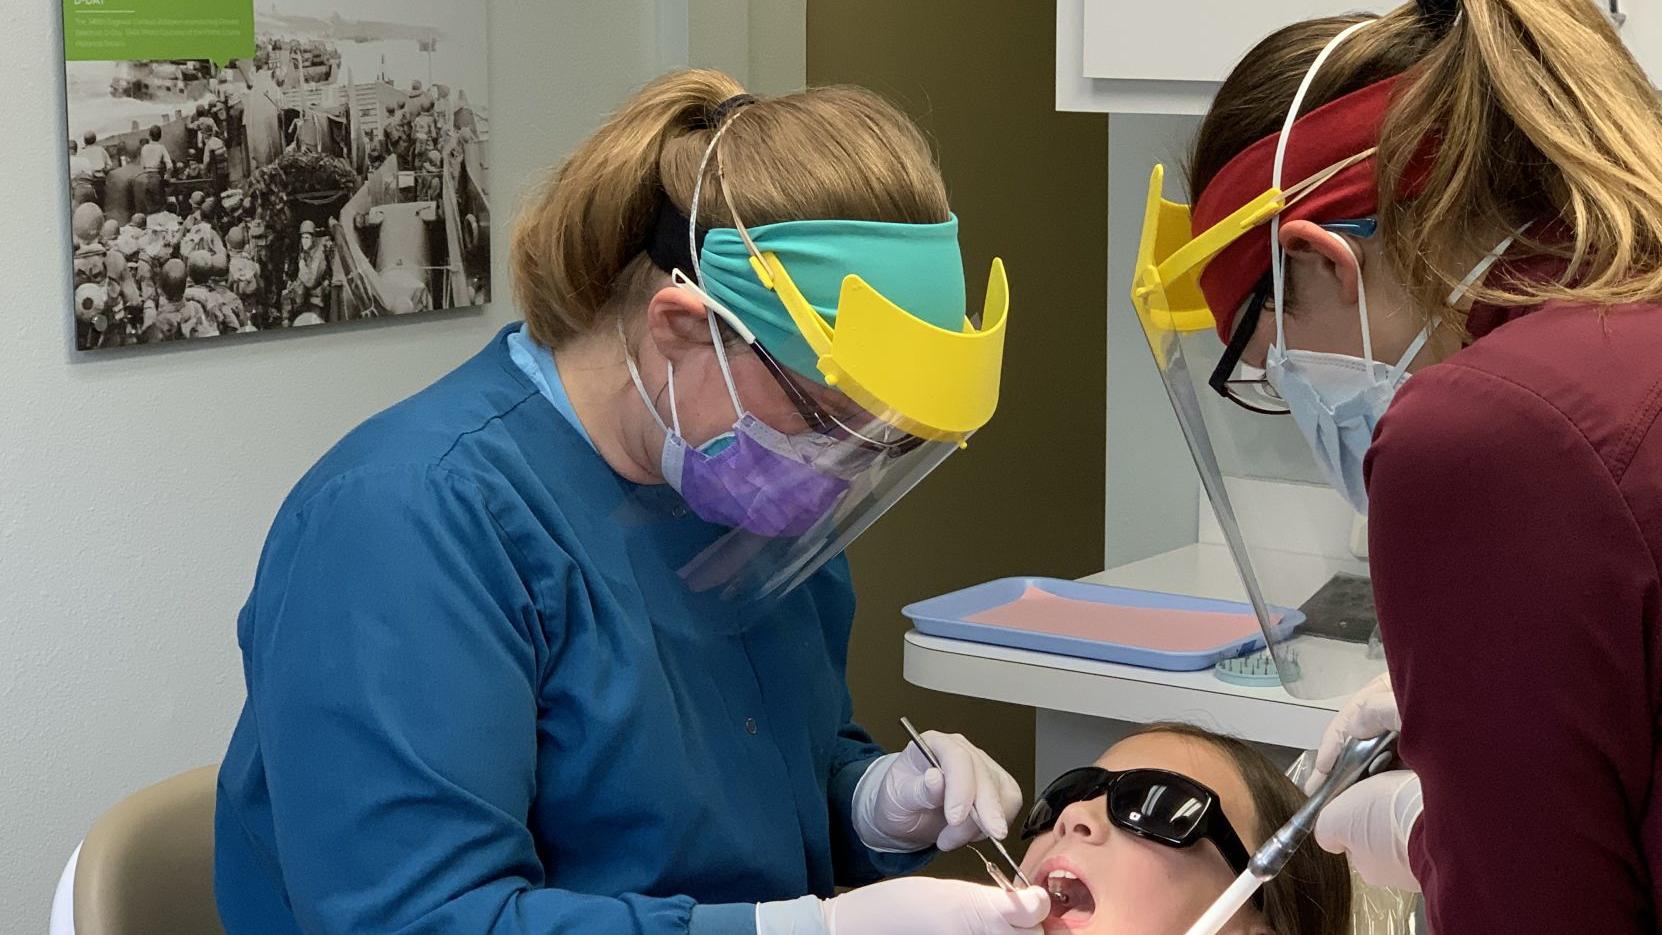 Dentists Adjust To New Normal Move Forward Amid Covid-19 Pandemic Local Columbustelegramcom